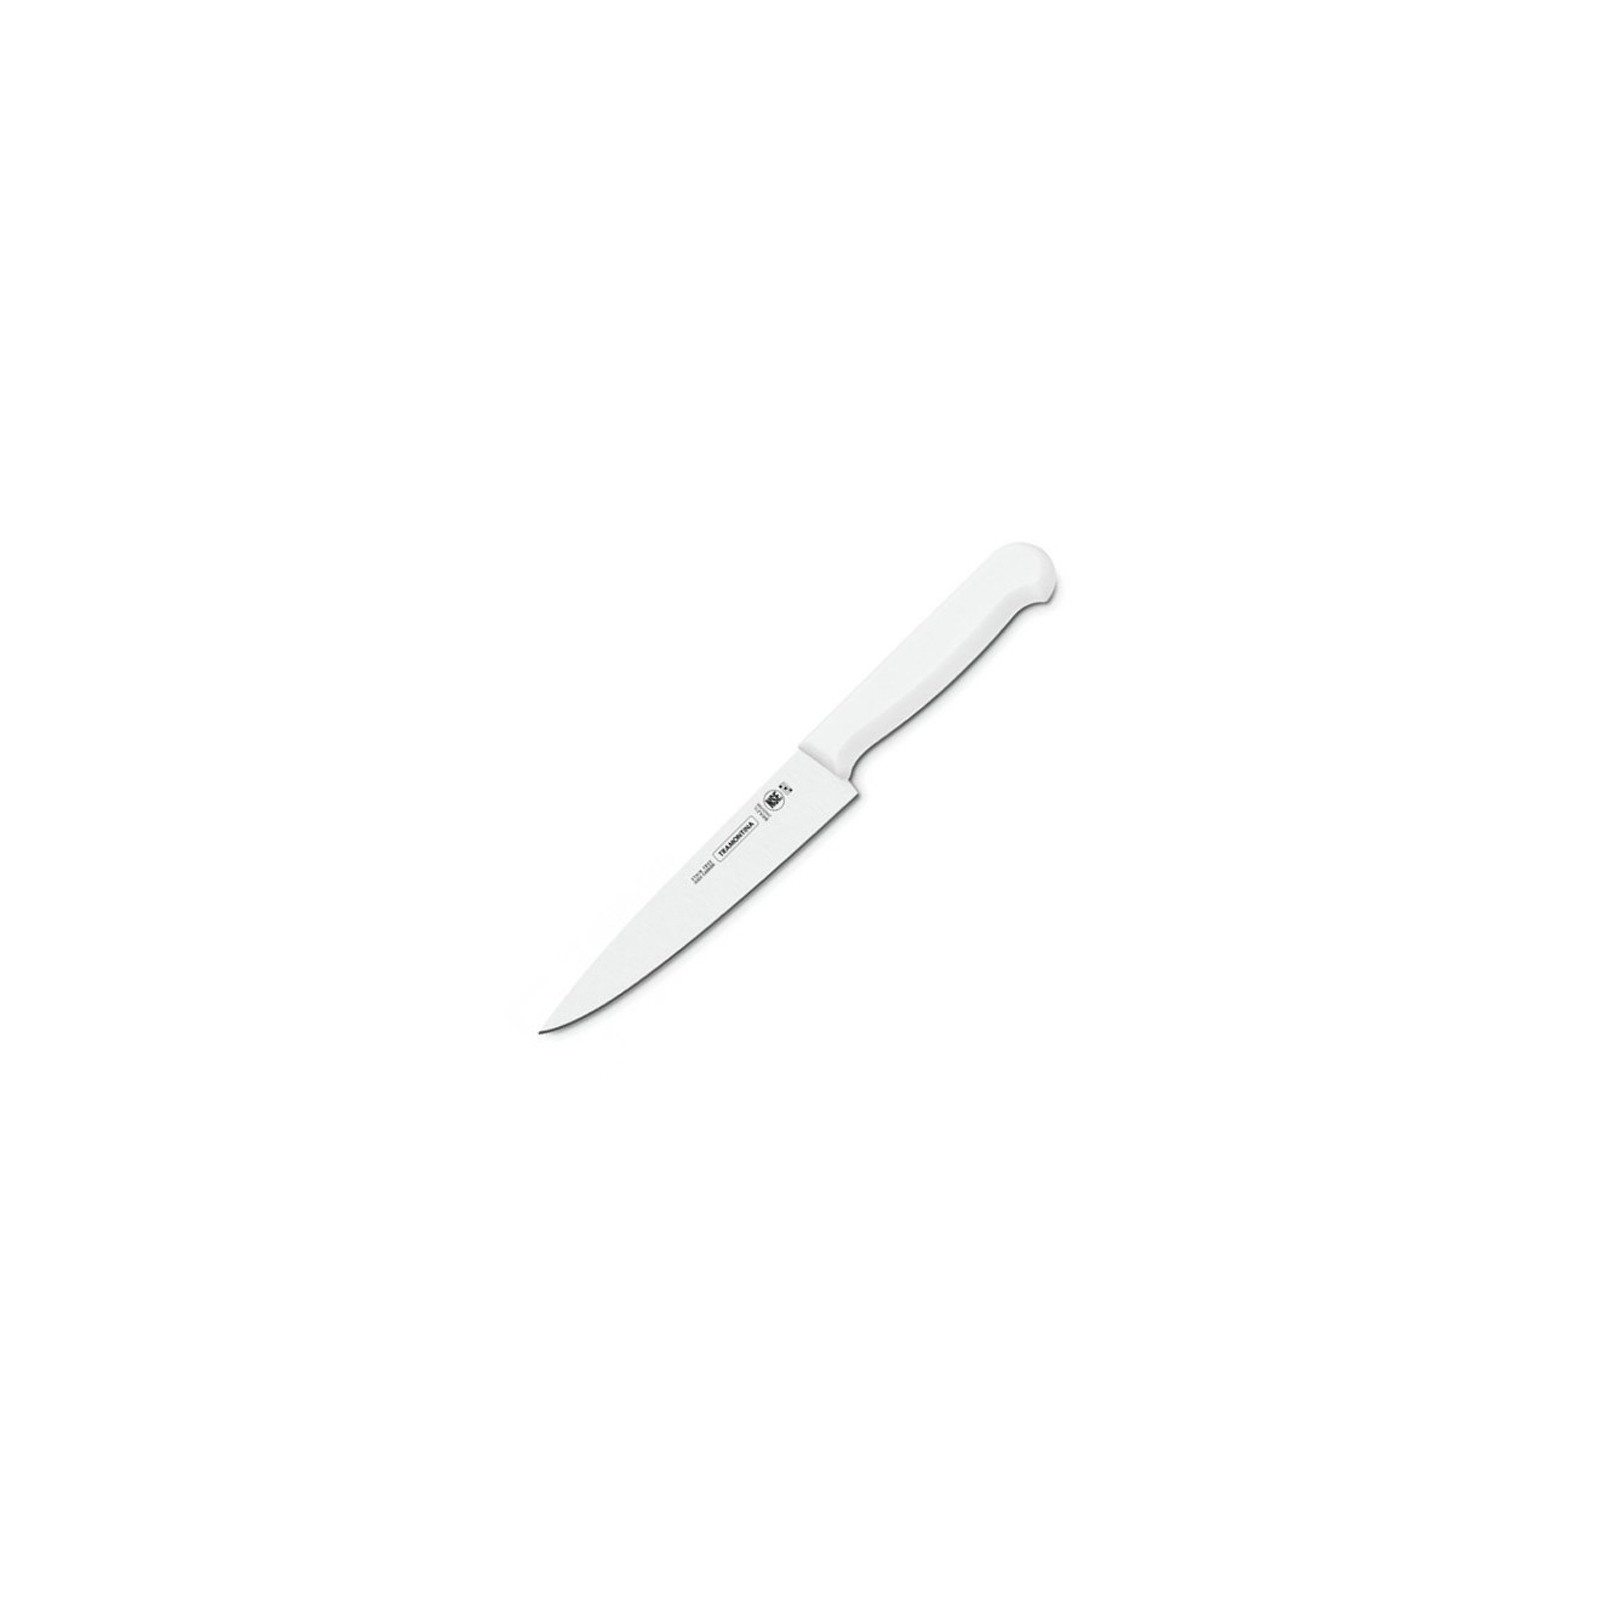 Кухонный нож Tramontina Professional Master для мяса 254 мм White (24620/180)